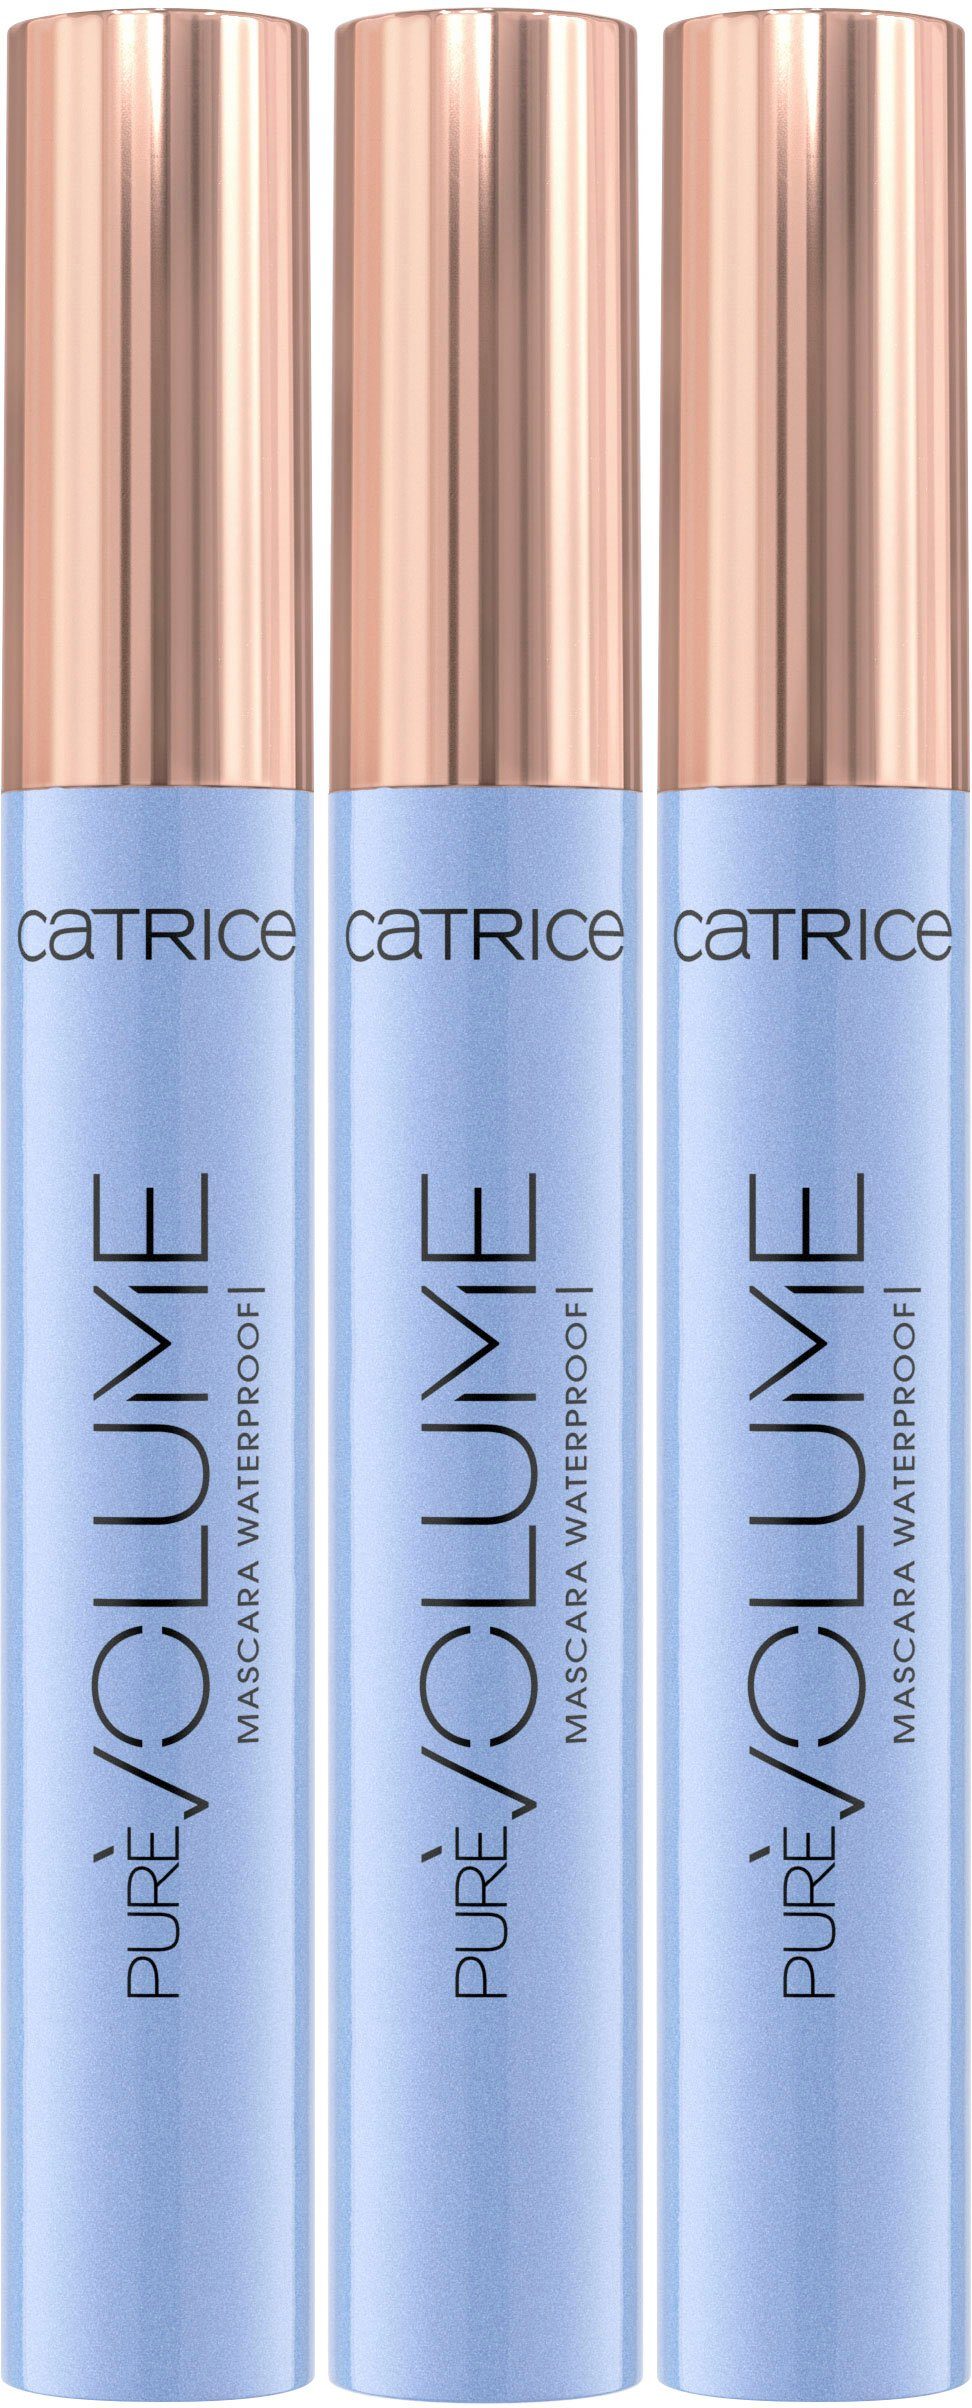 Catrice Mascara Pure Volume Waterproof, 3-tlg